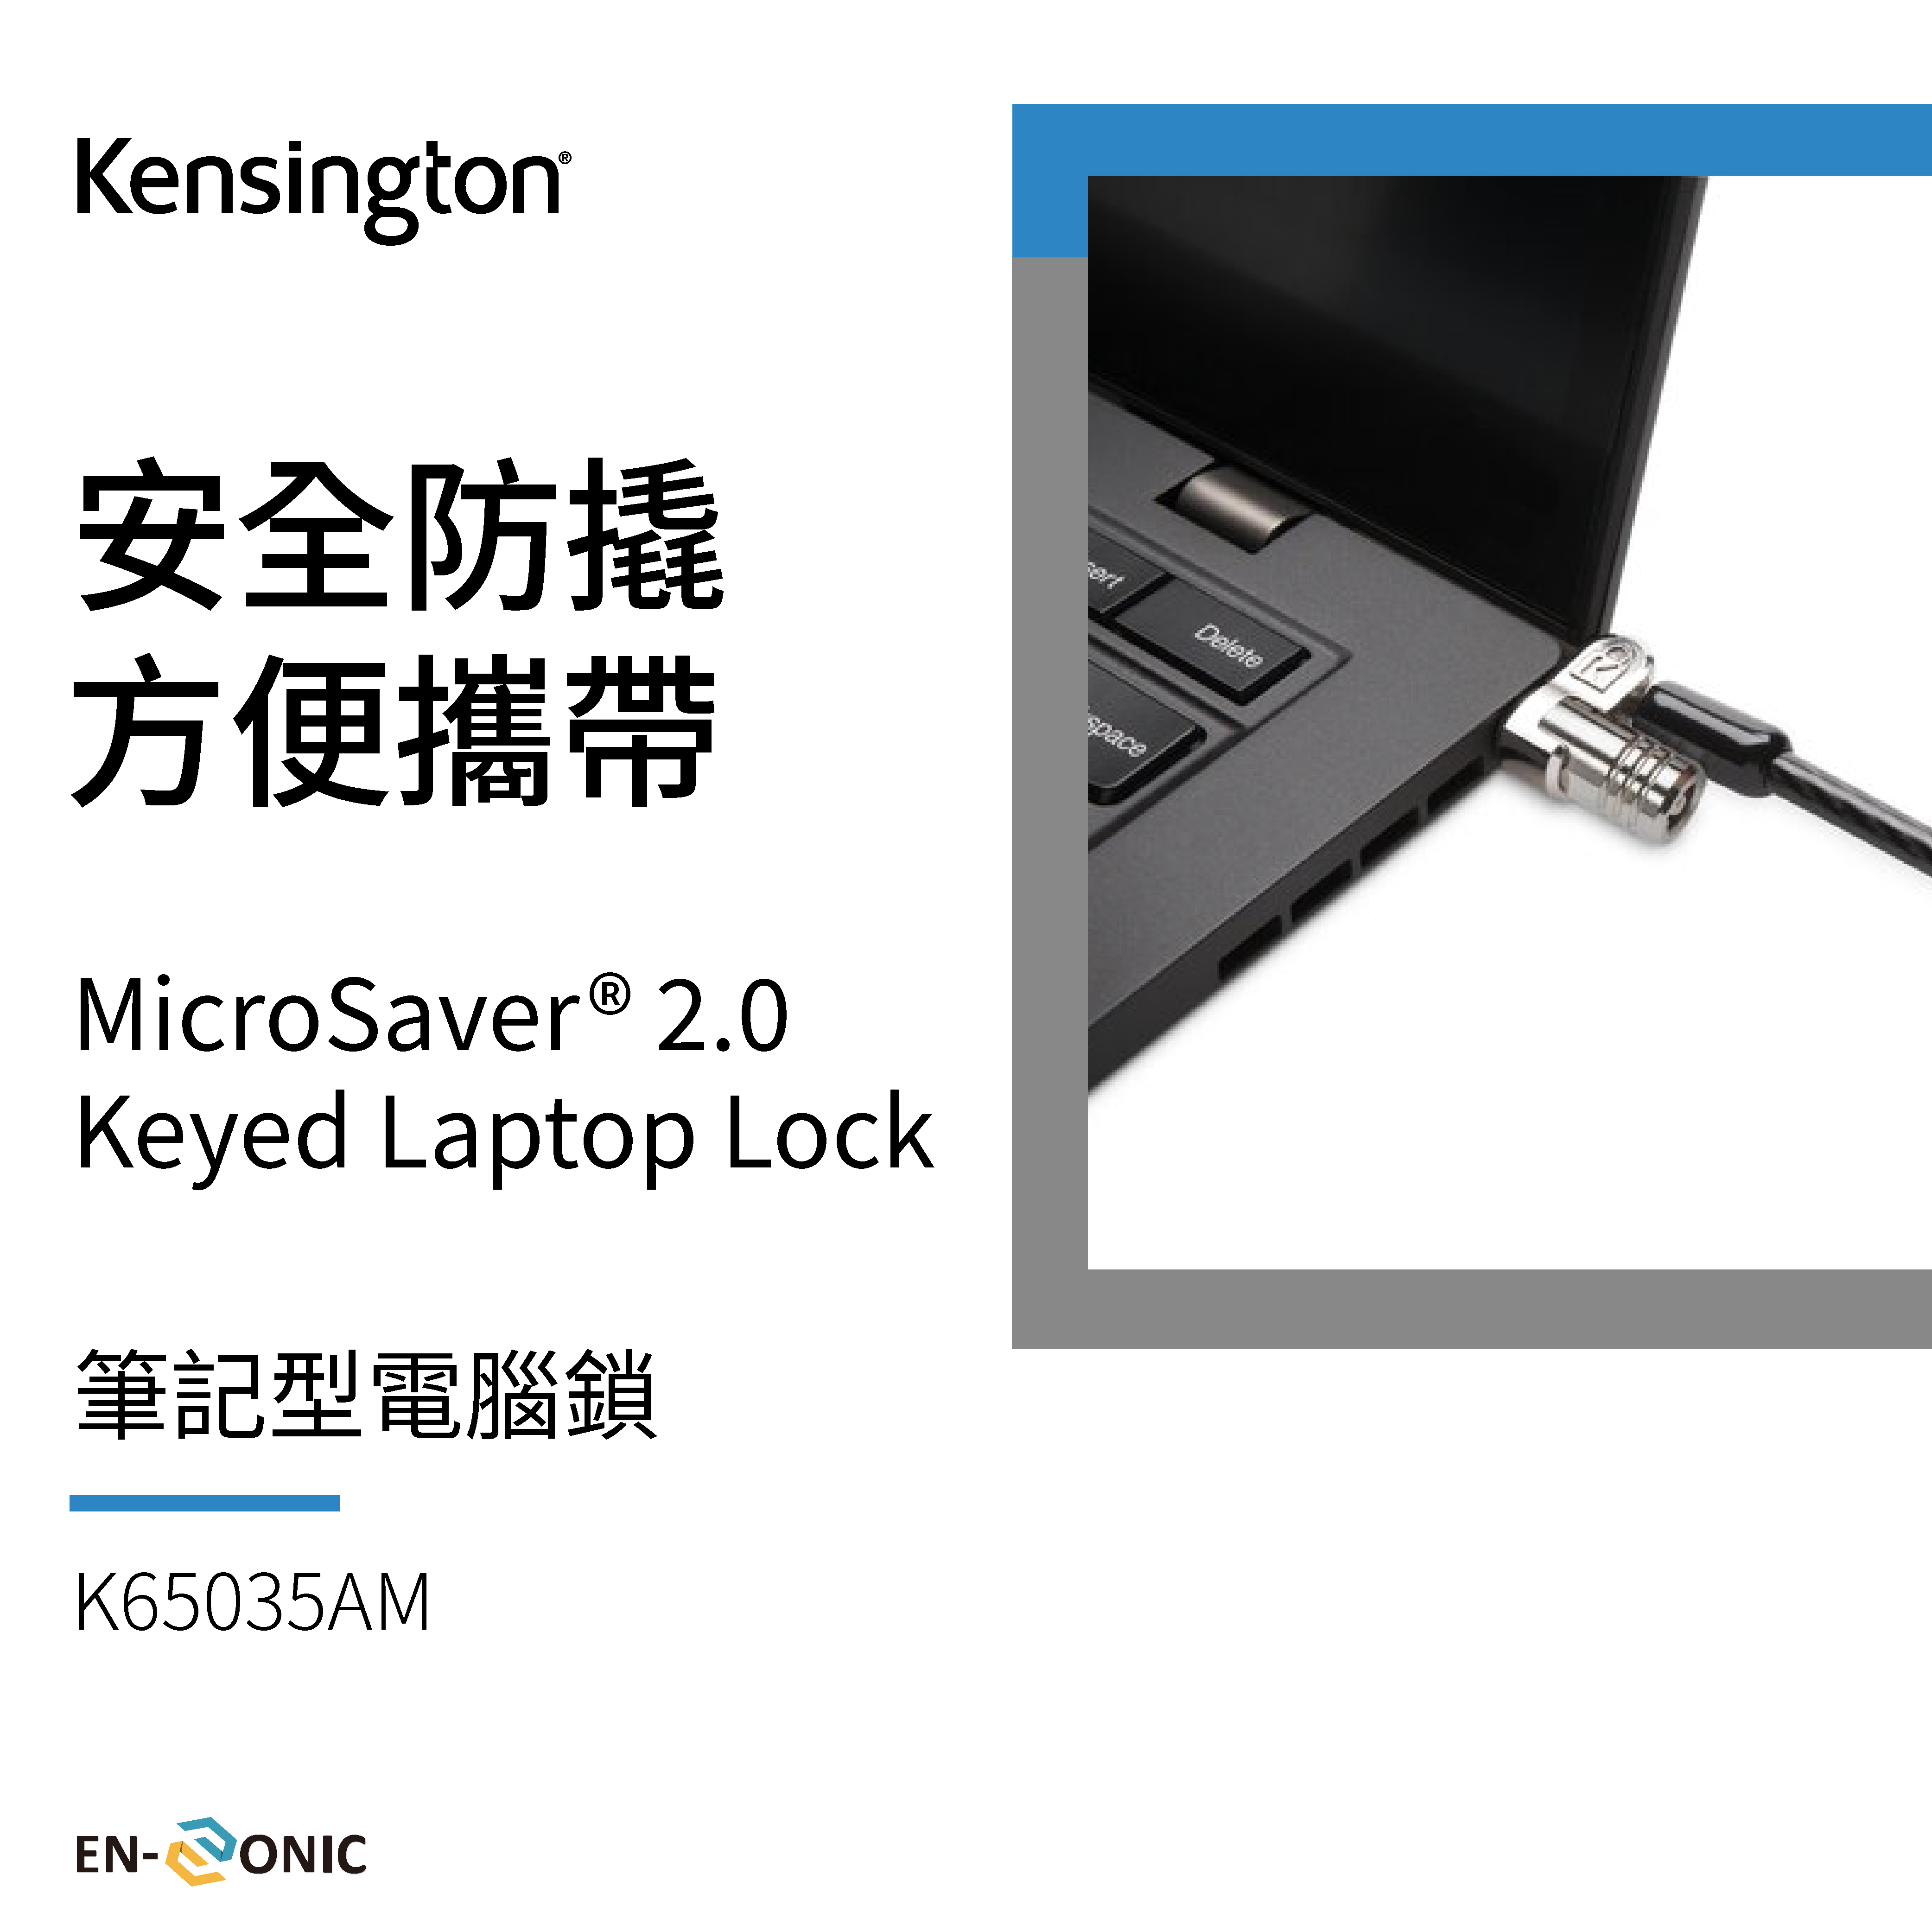 Kensington】MicroSaver® 2.0 Keyed Laptop Lock (K65035AM) 筆記型